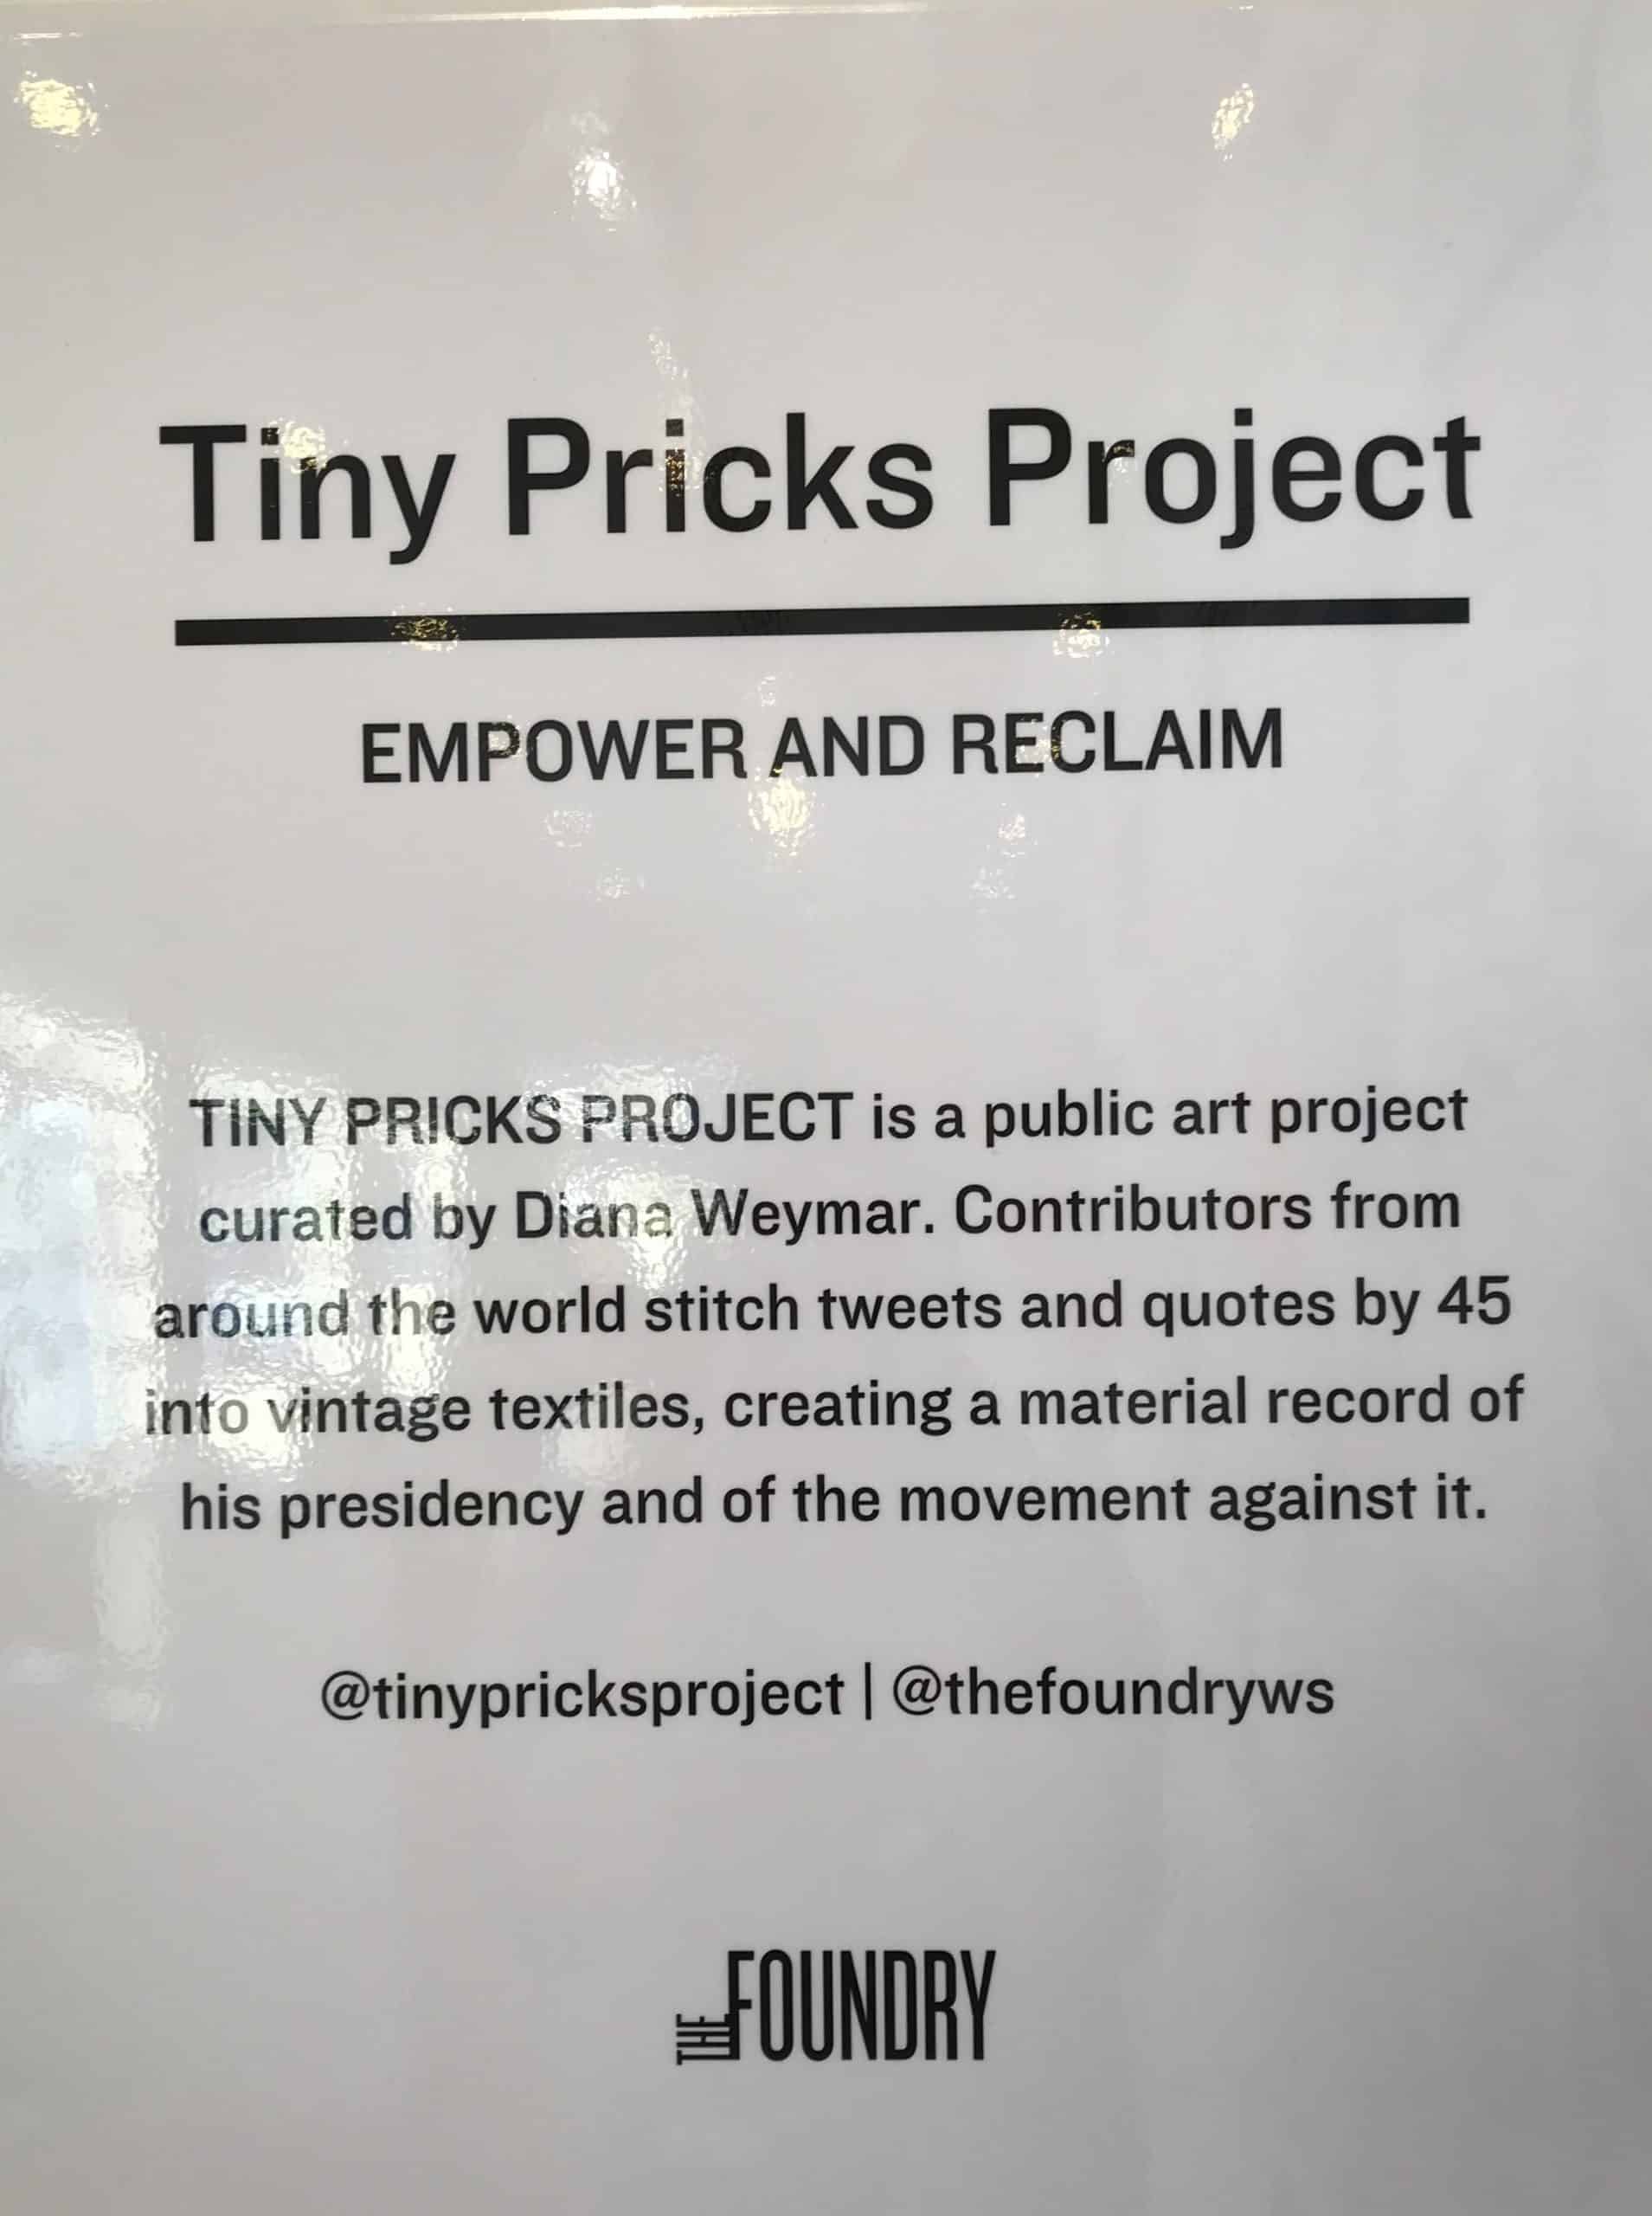 Tiny Pricks Project exhibit sign